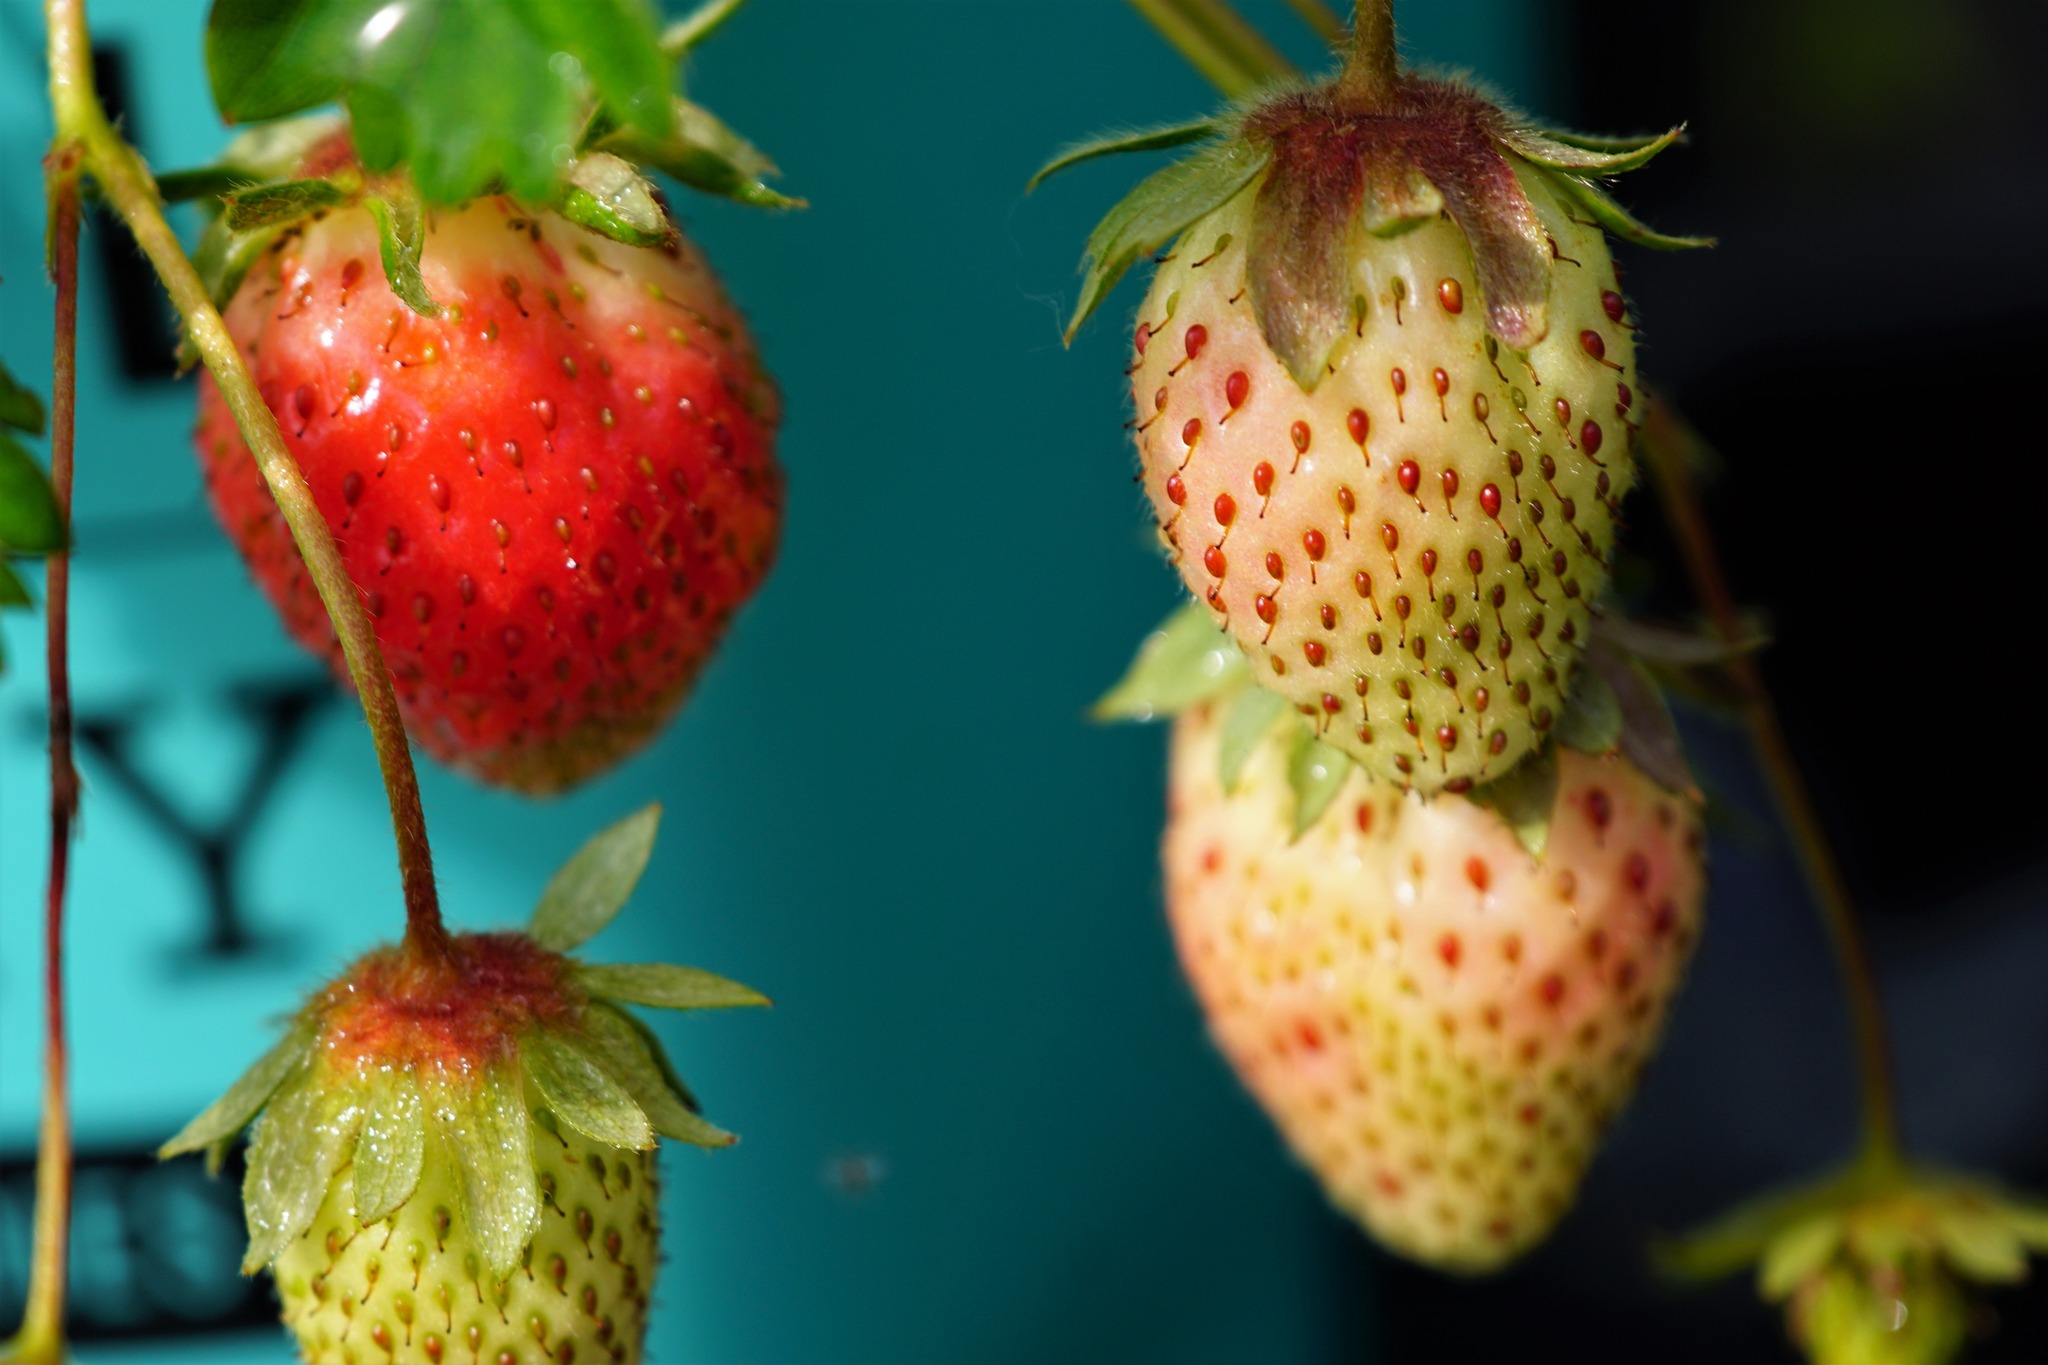 Bushel And Berry Strawberries